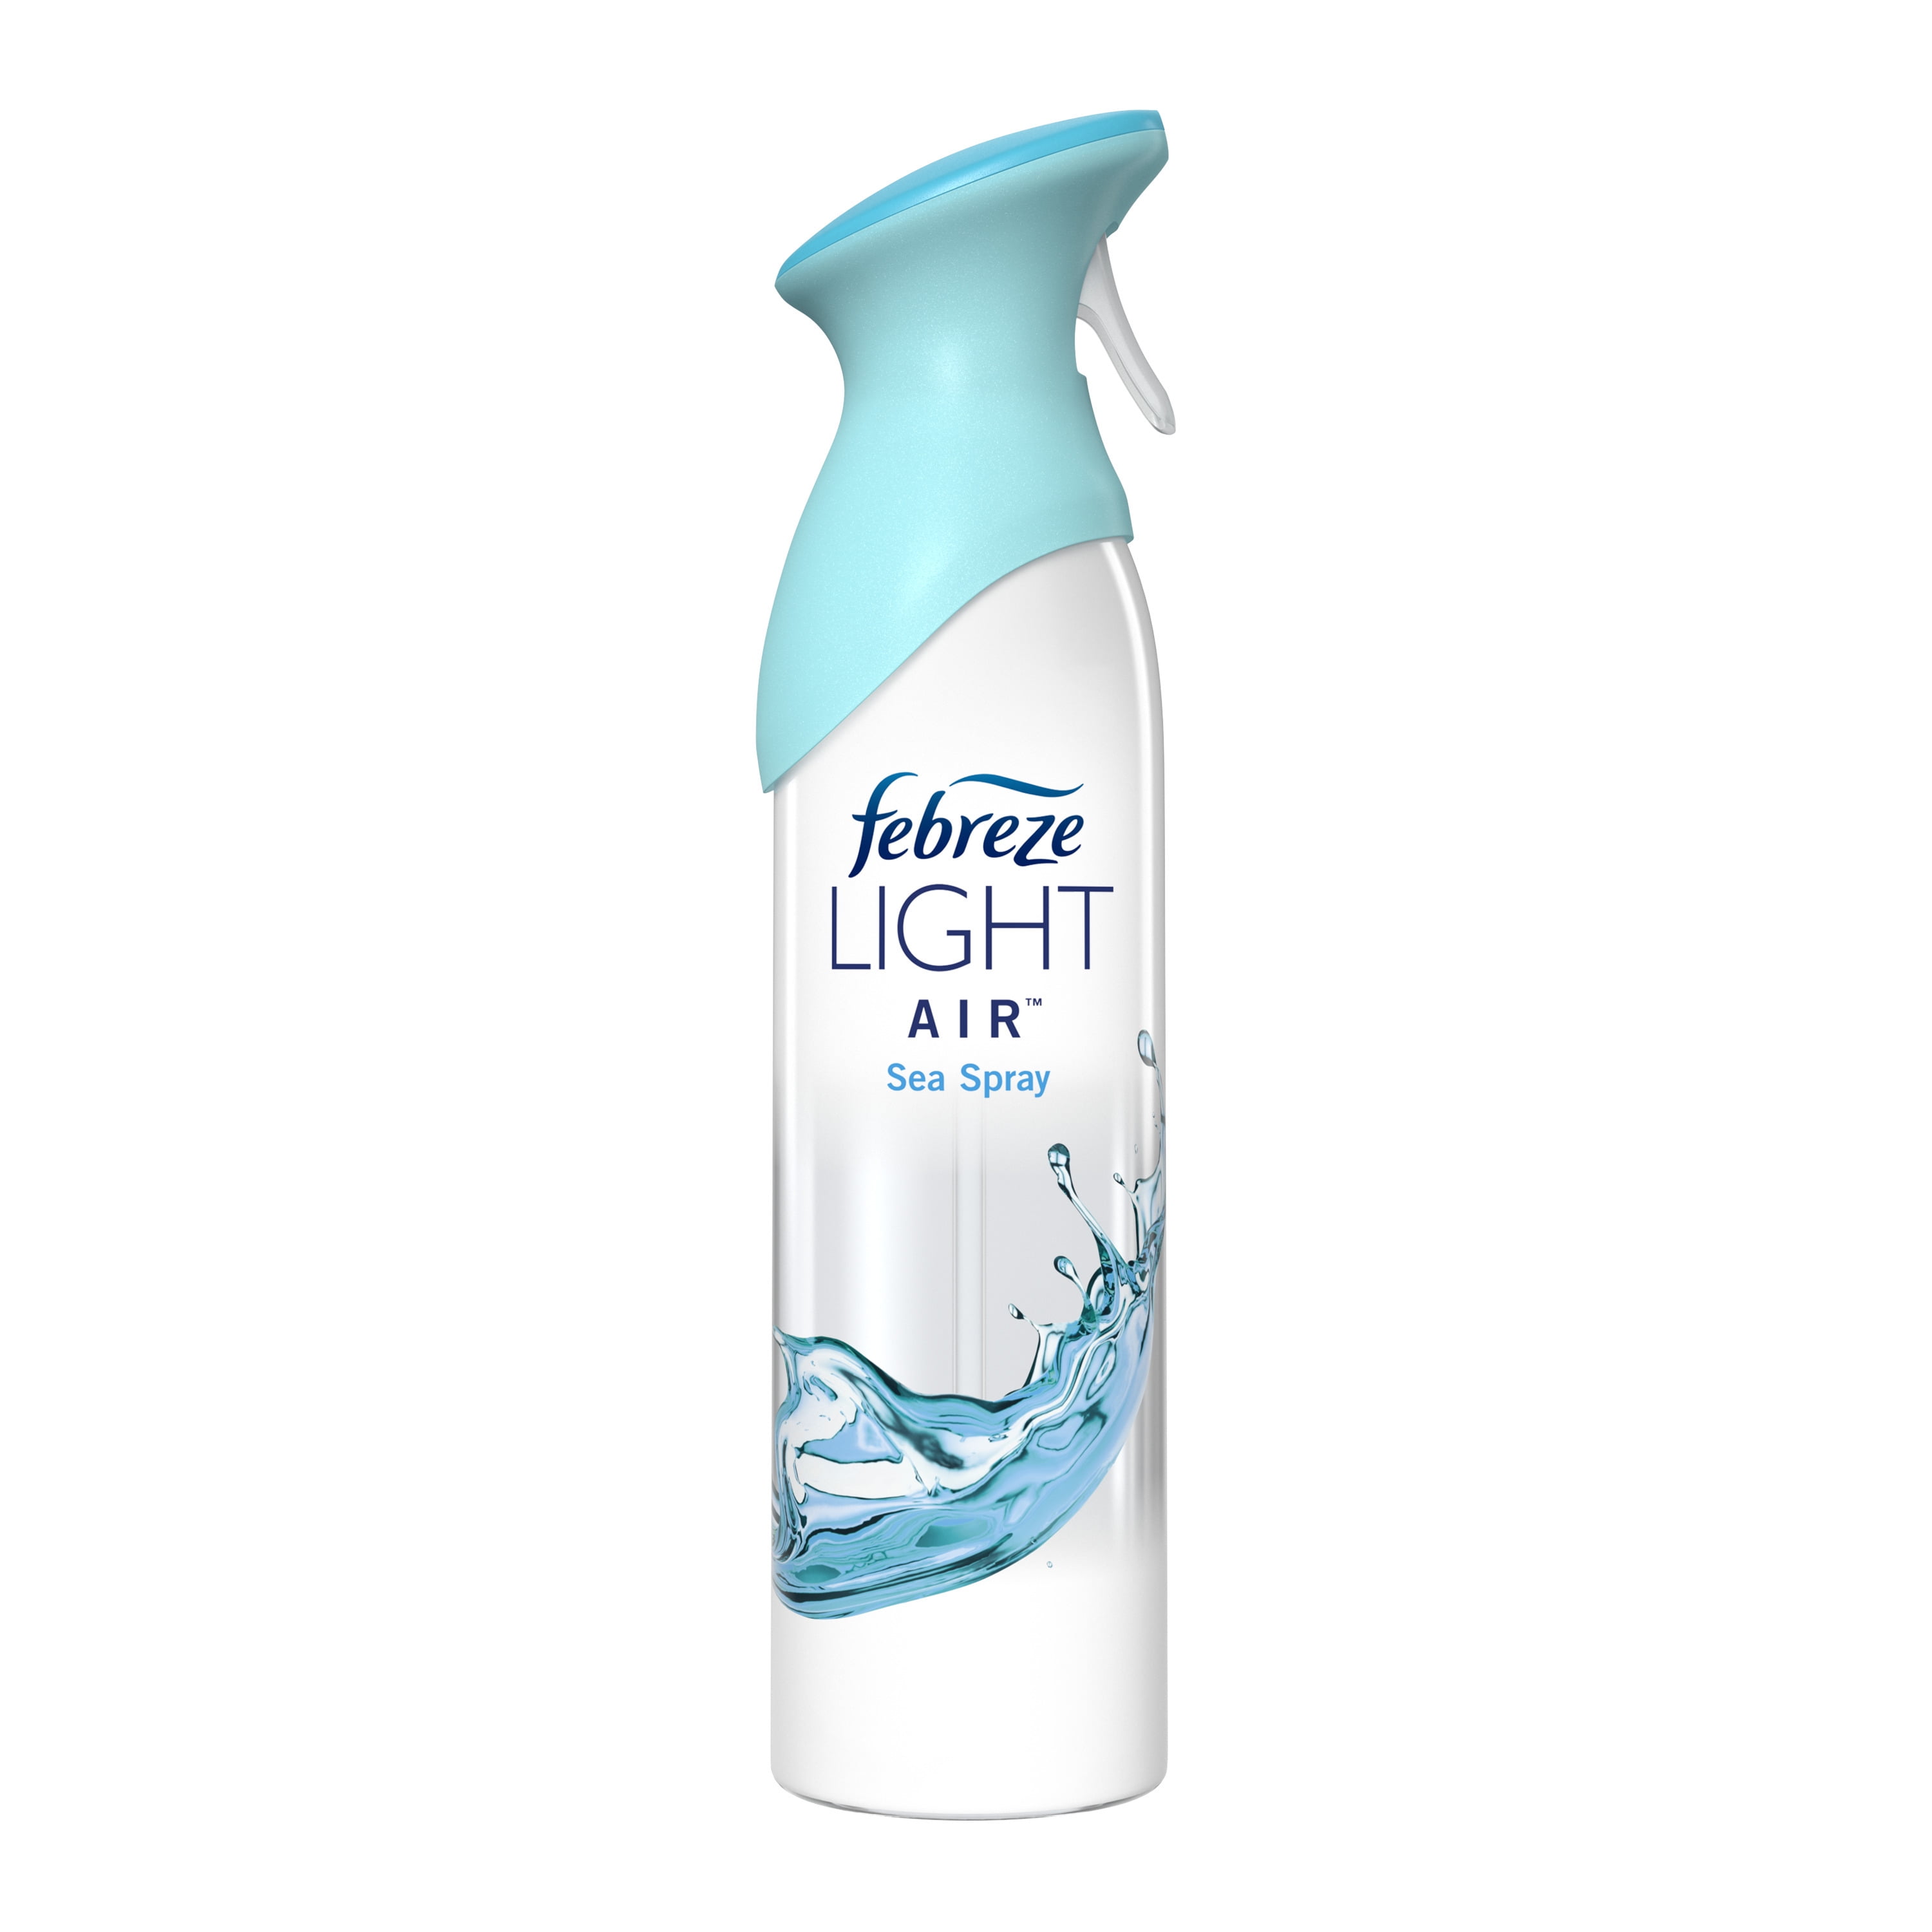 Febreze Air Light 62983 Sea Spray Scented Air Freshener 8.8 fl. oz. - 6/Case